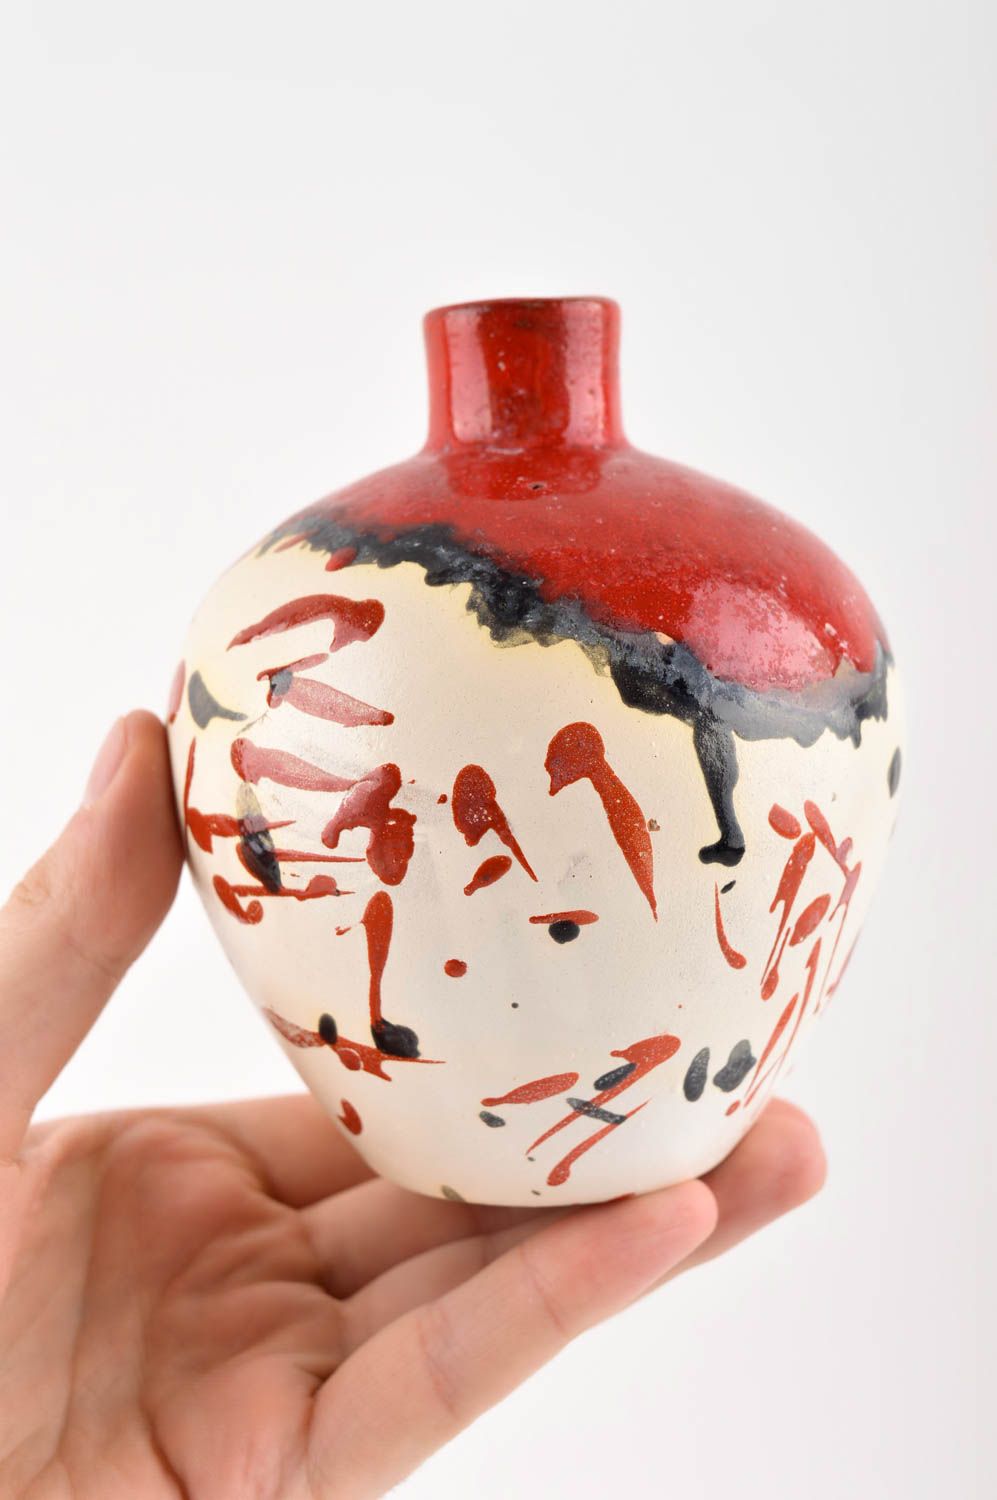 12 oz ceramic hand-painted sake, vodka pitcher 5,51, 0,78 lb photo 5